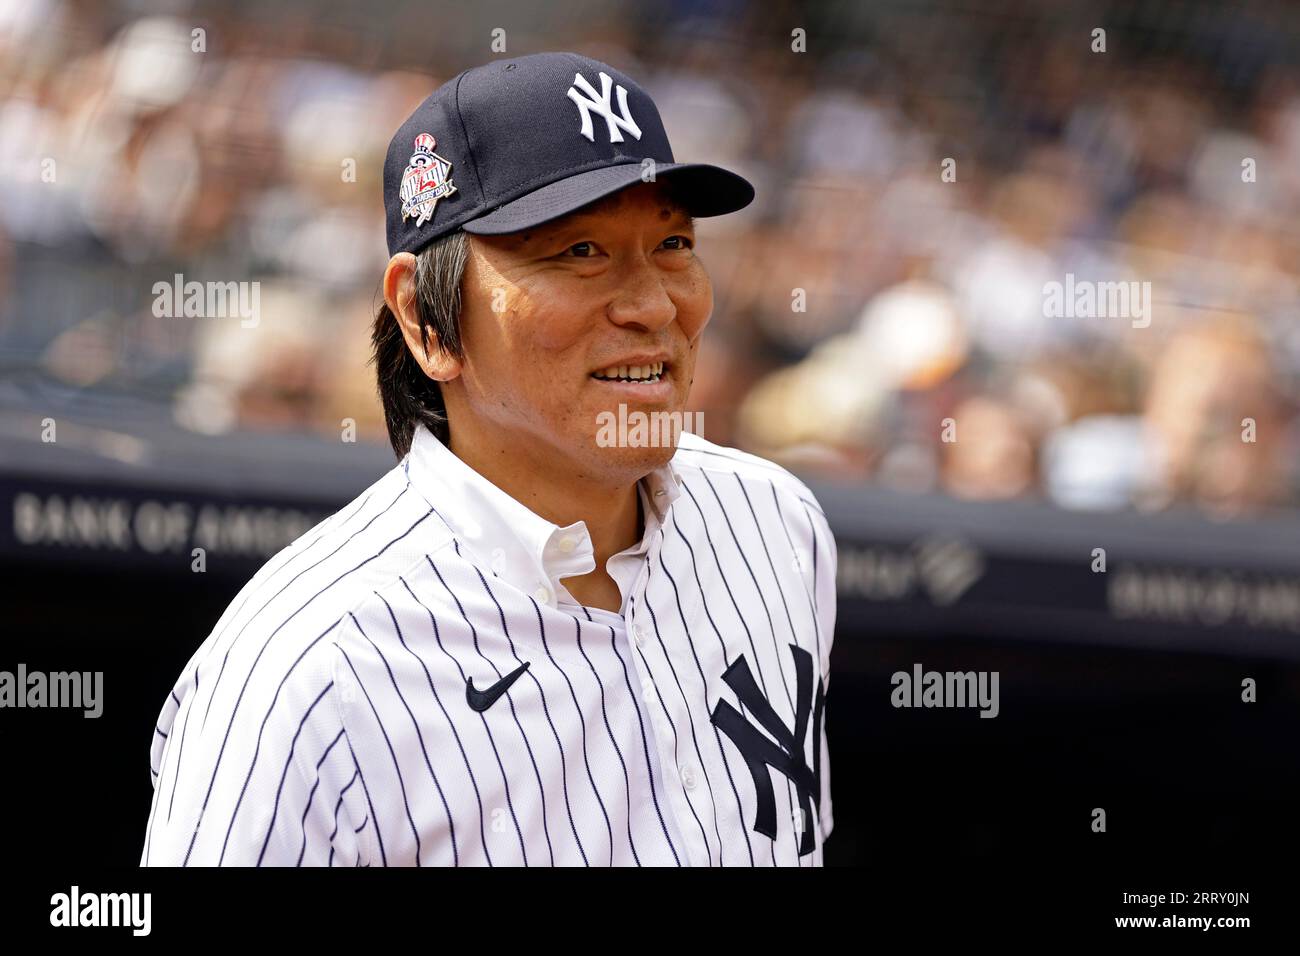 The next Hideki Matsui? Yankees could land Japanese superstar 